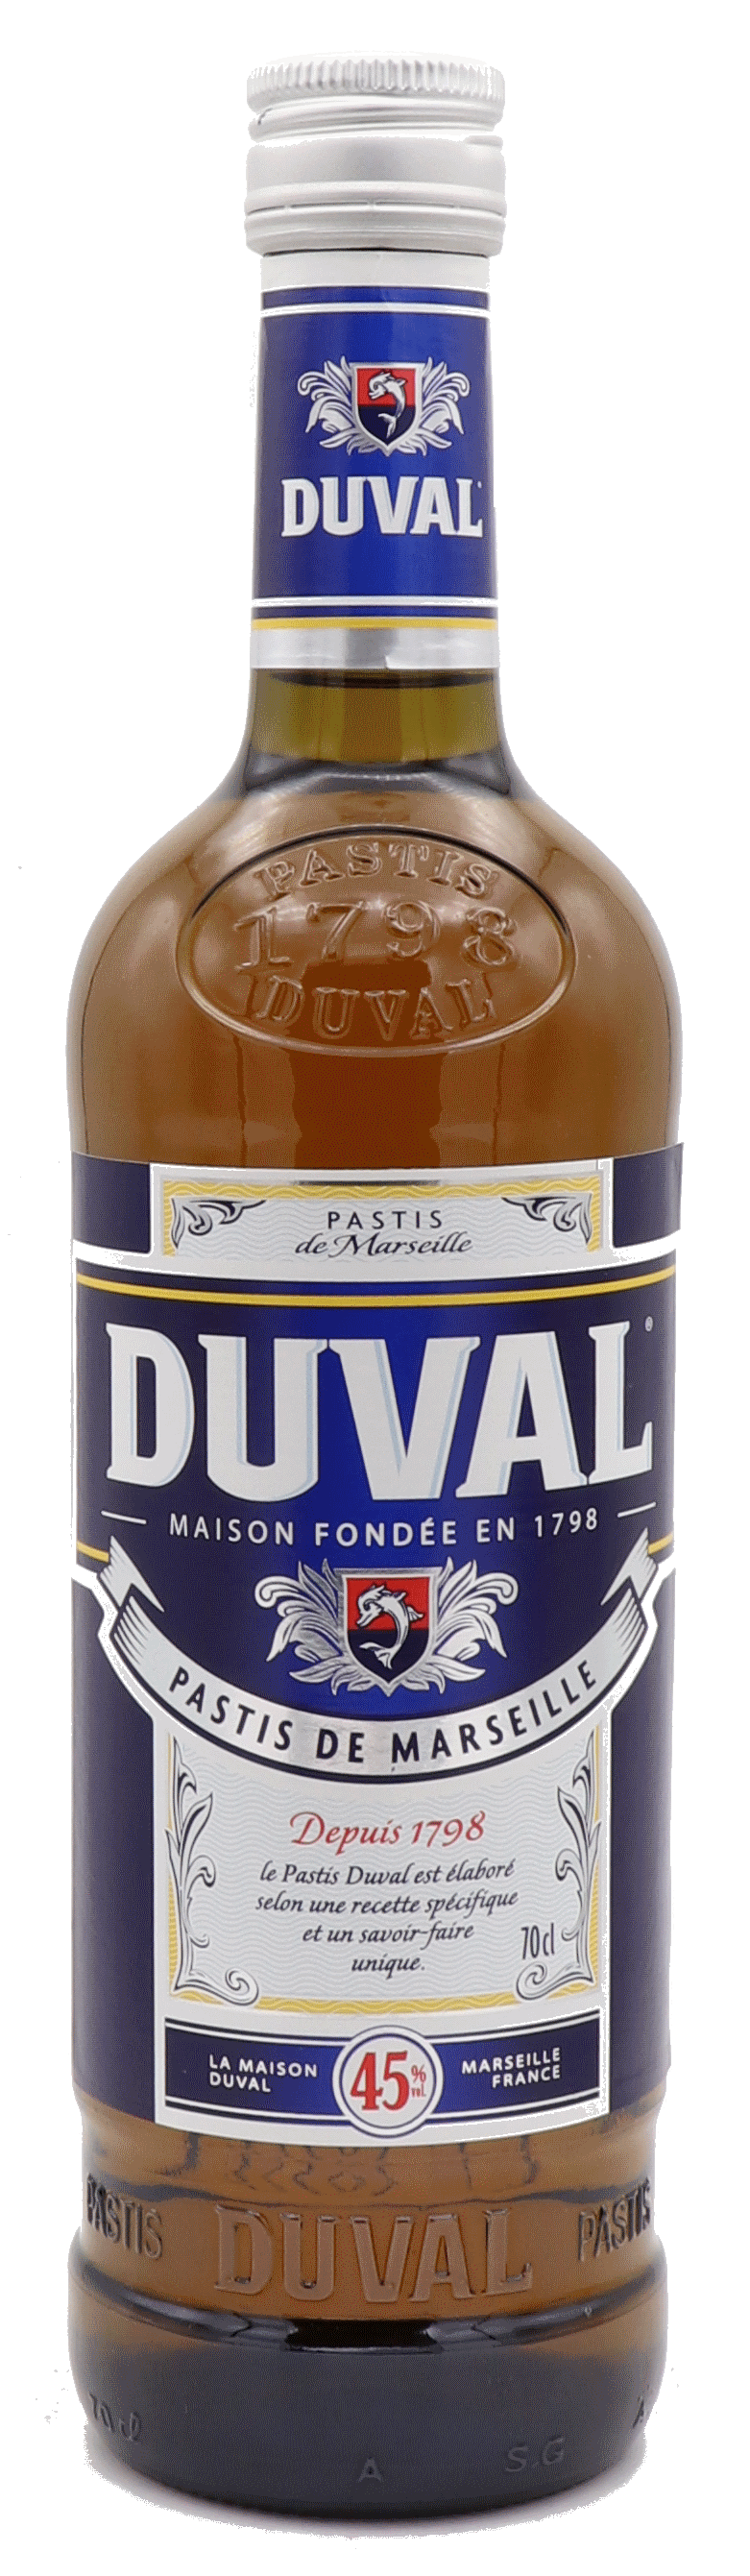 Duval - Pastis de Marseille